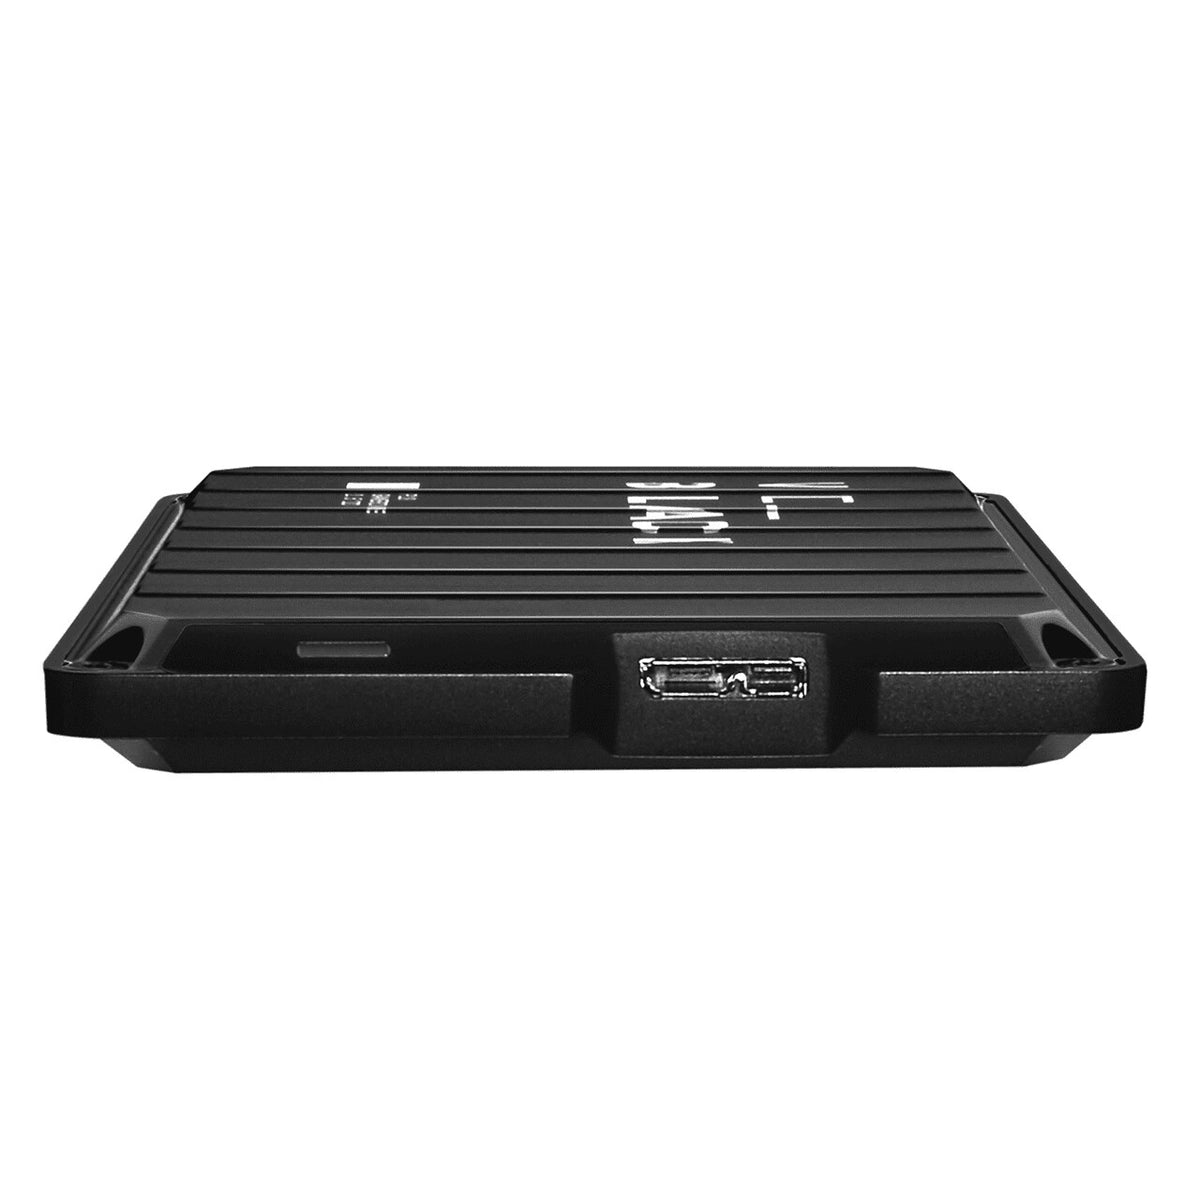 Western Digital WD_BLACK P10 Game Drive - External hard drive - 2 TB